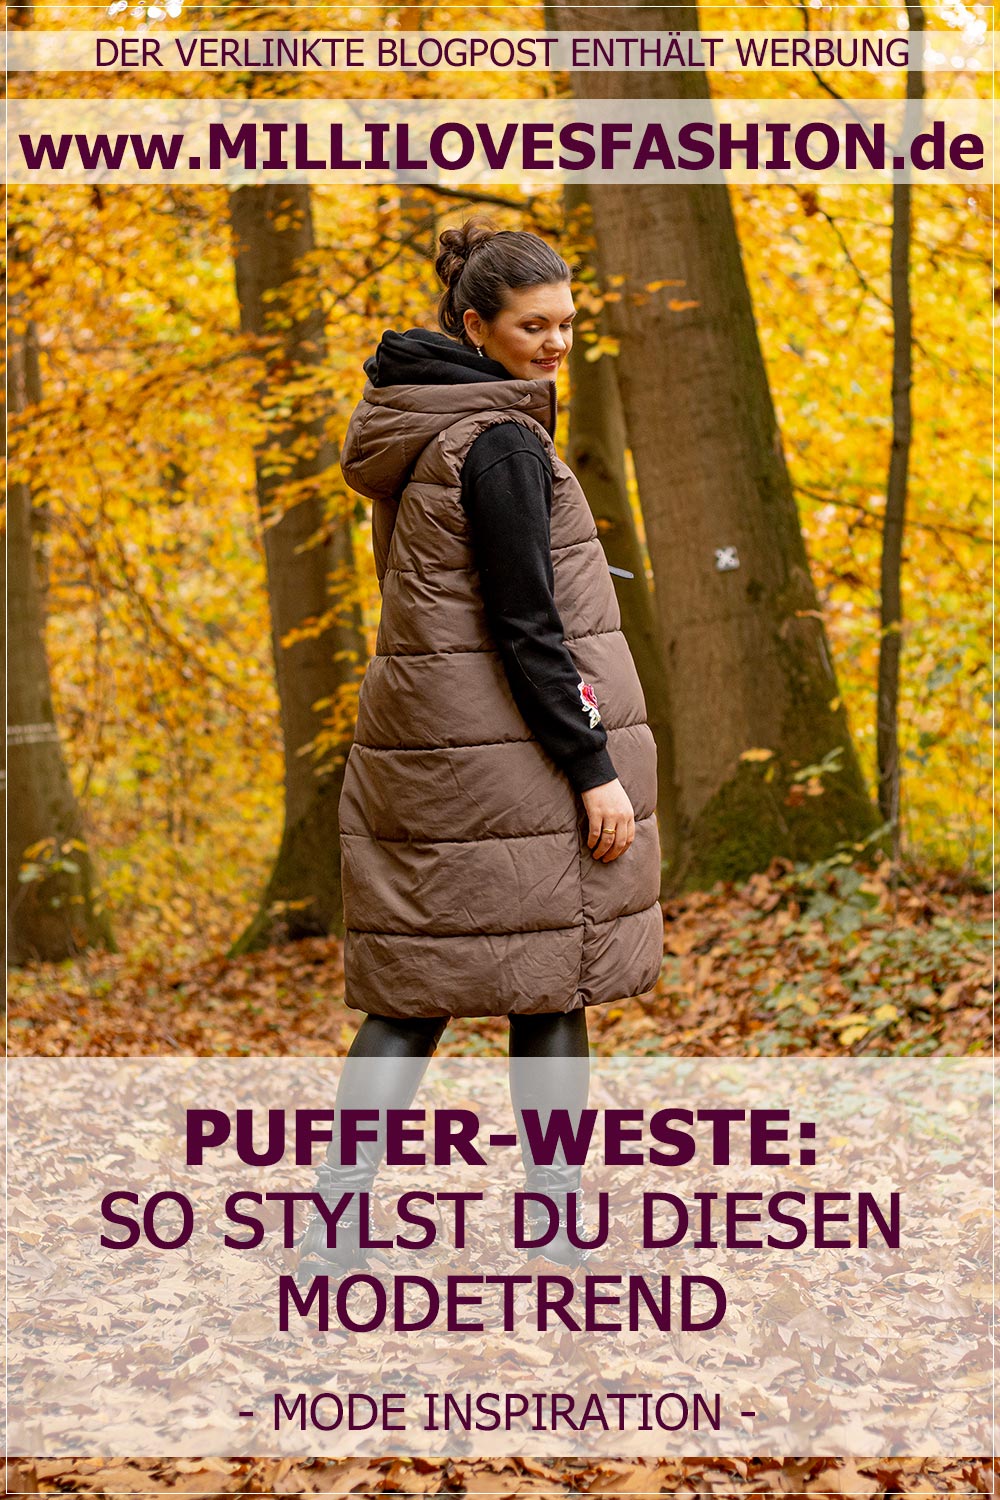 Der Modetrend Puffer-Weste als Herbstlook